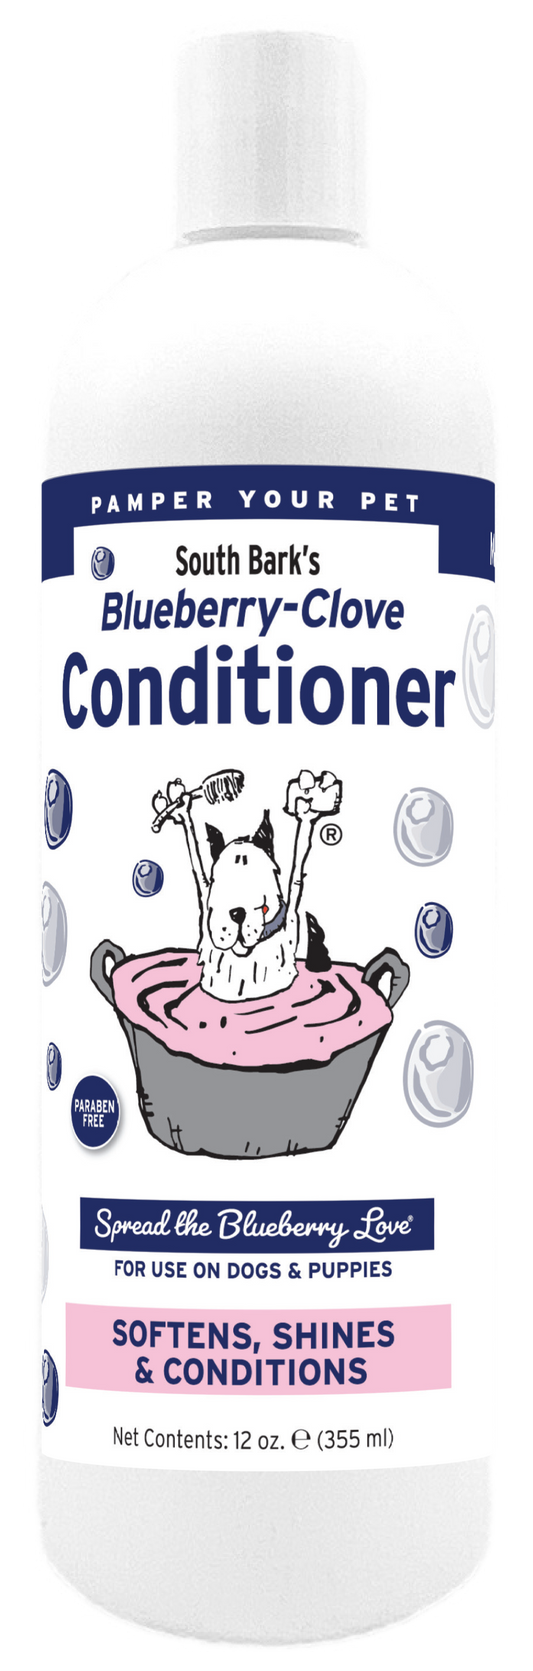 Blueberry-Clove Pet Conditioner | South Bark™